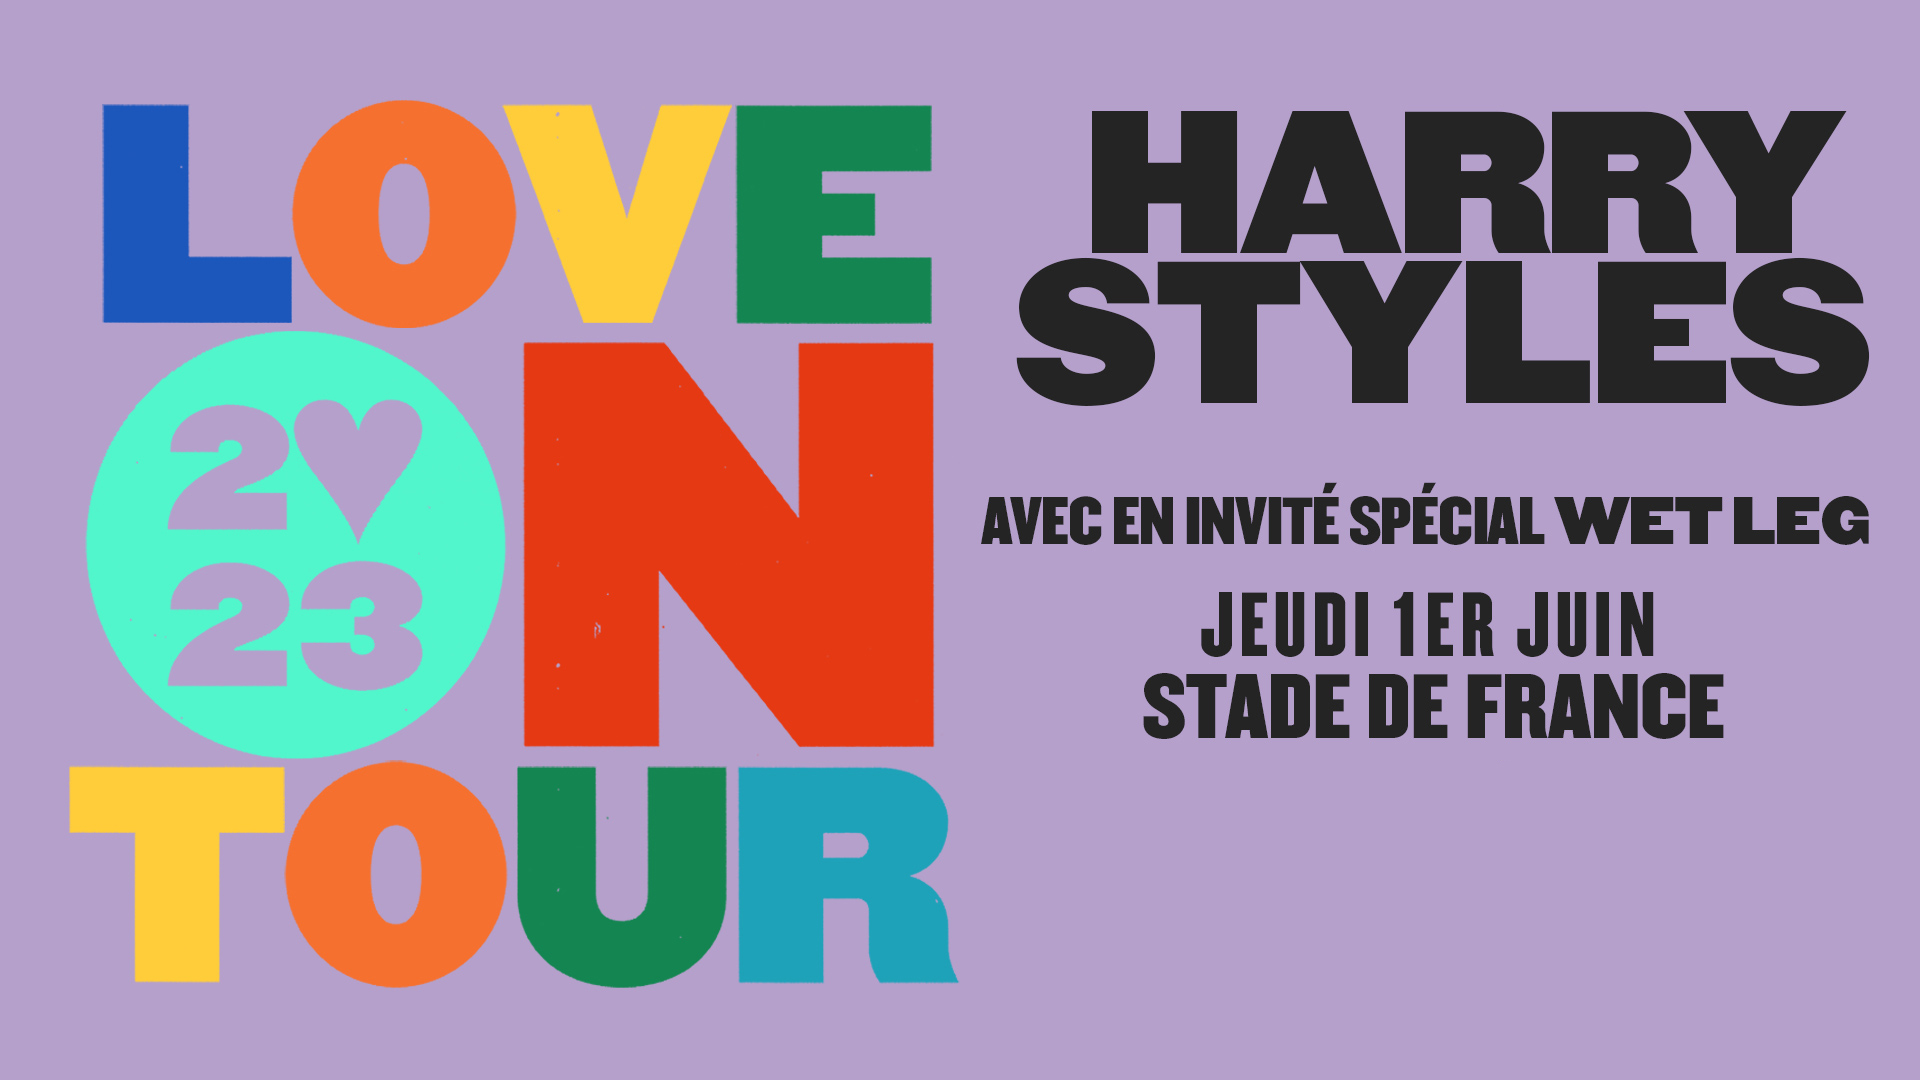 Harry Styles concert in Paris Love on Tour 2023 1 JUN 2023